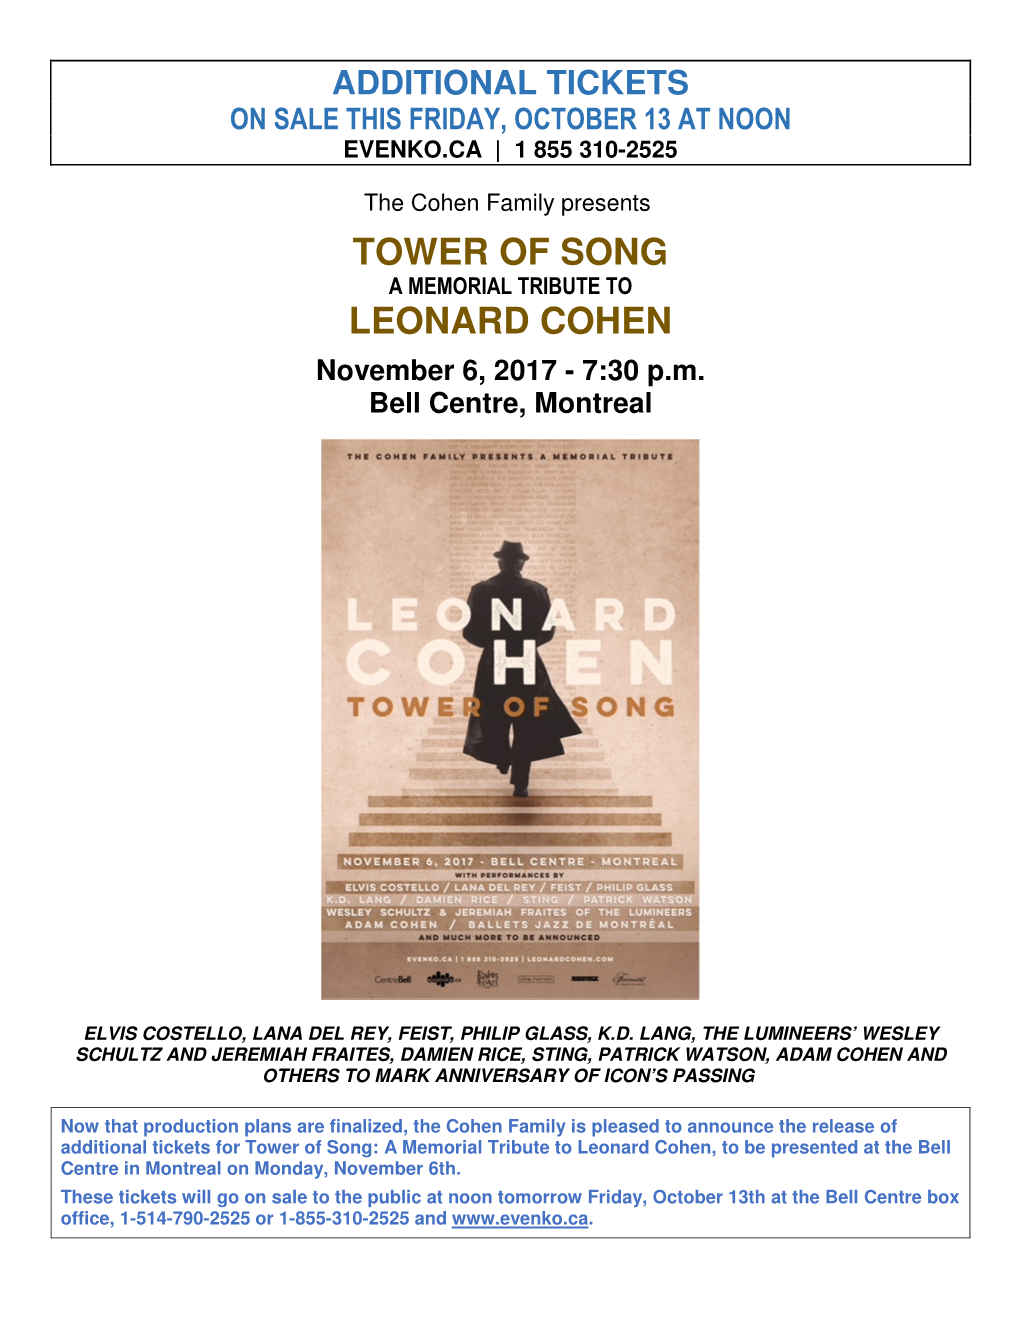 Tower of Song Leonard Cohen